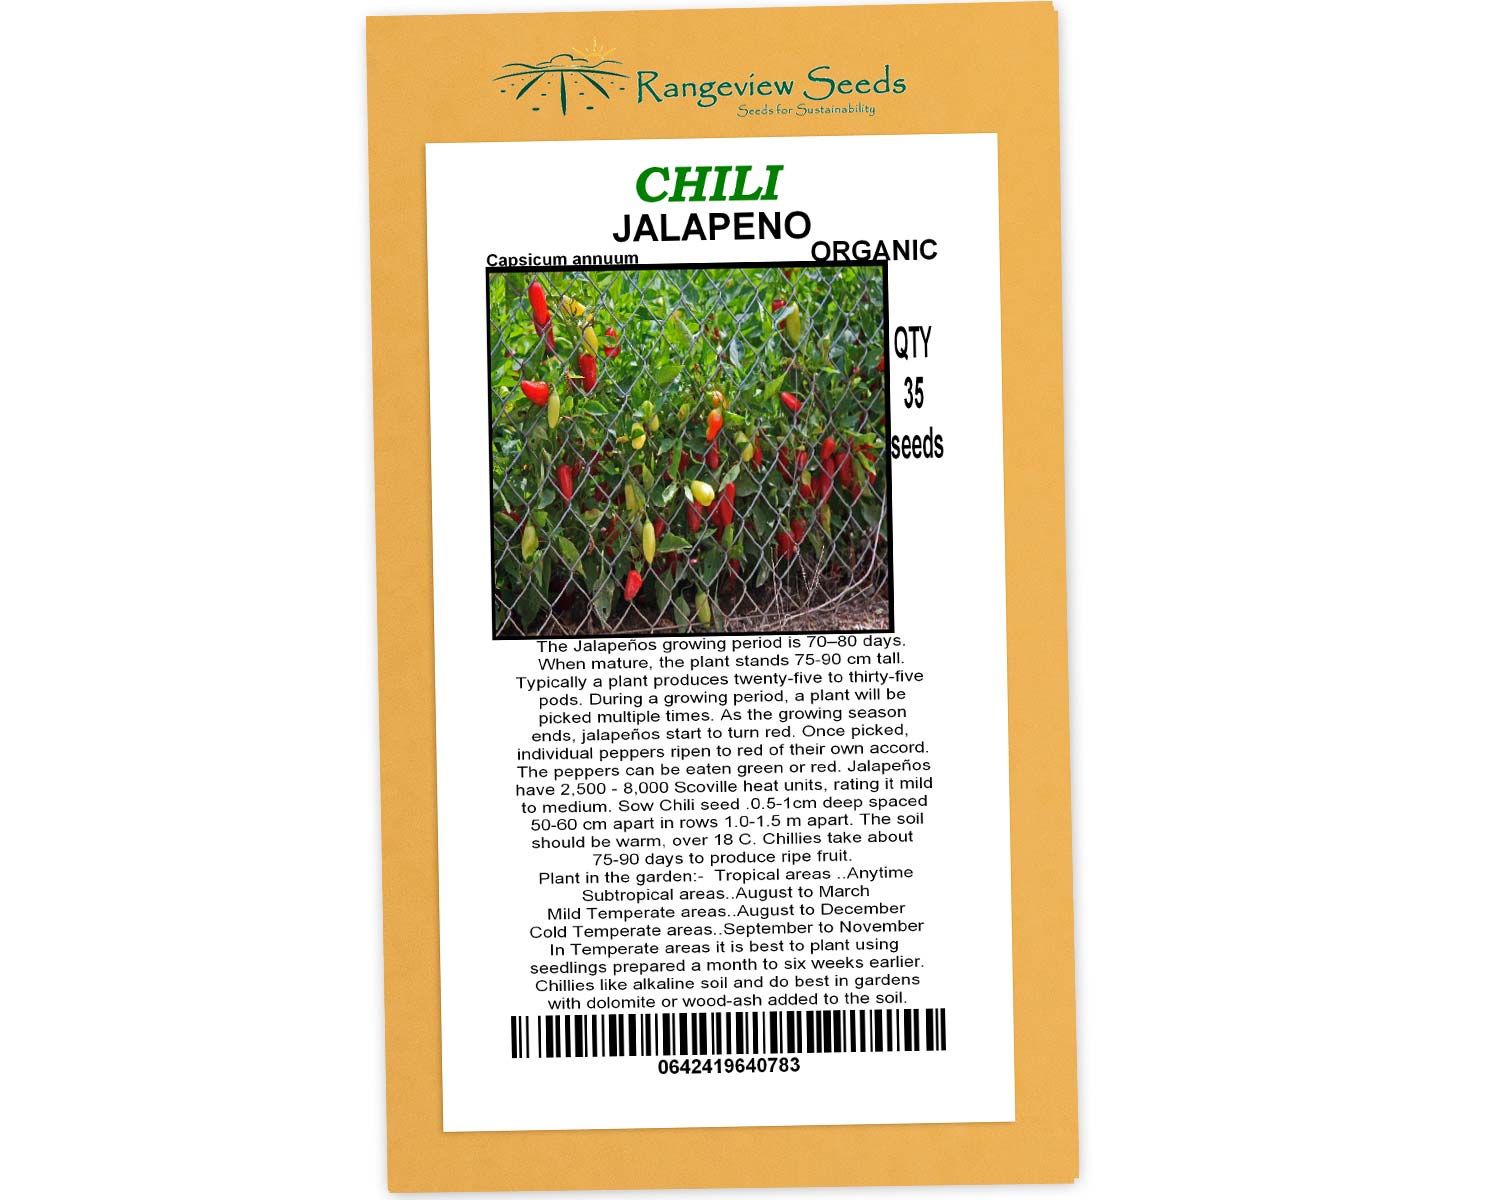 Chili Jalapeno - Rangeview Seeds